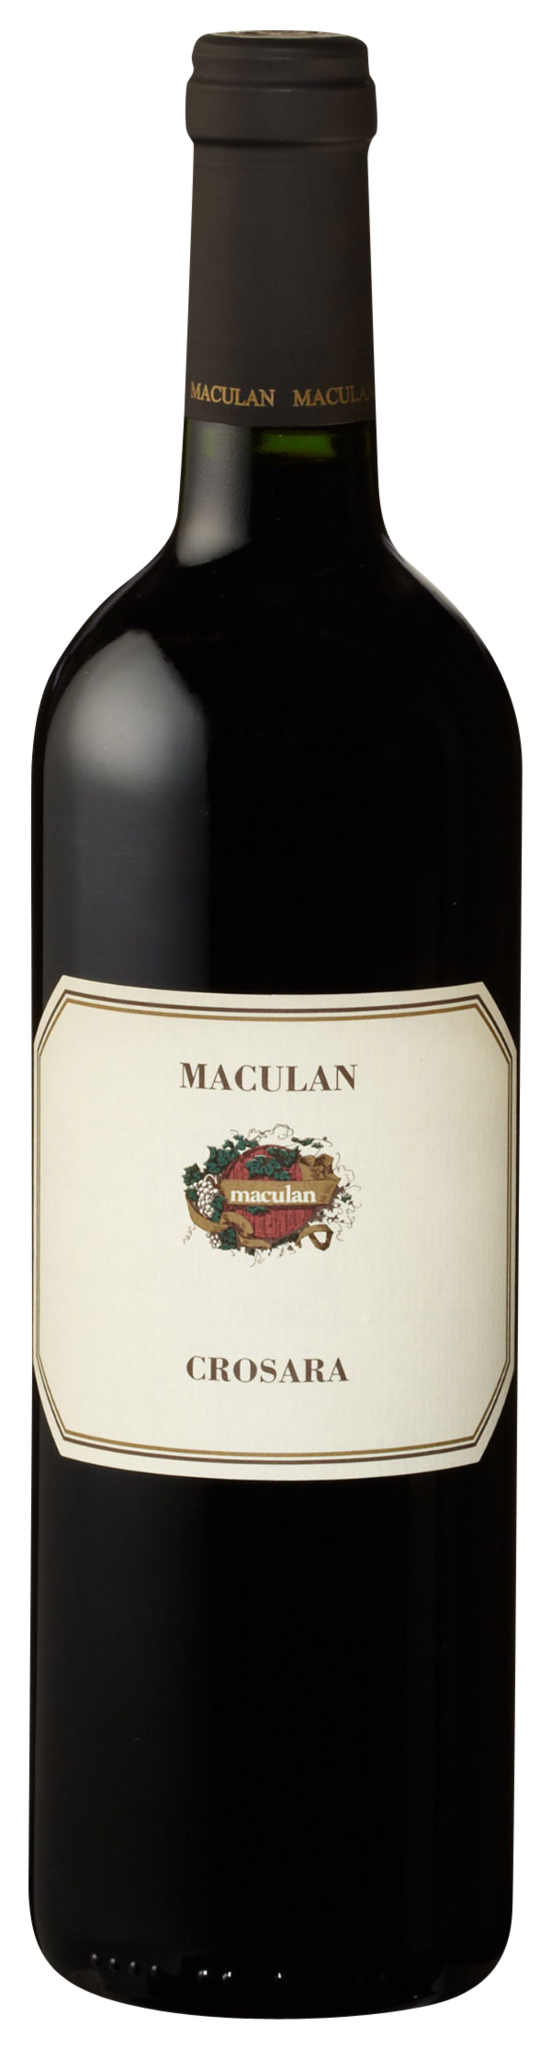 Прима макула. Вино Maculan Brentino Breganze doc 2015, 0.75 л. Вино Maculan, "Fratta", 2015. Вино Maculan Dindarello 2016 0.75 л. Вино Maculan Torcolato 2005 0.75 л.